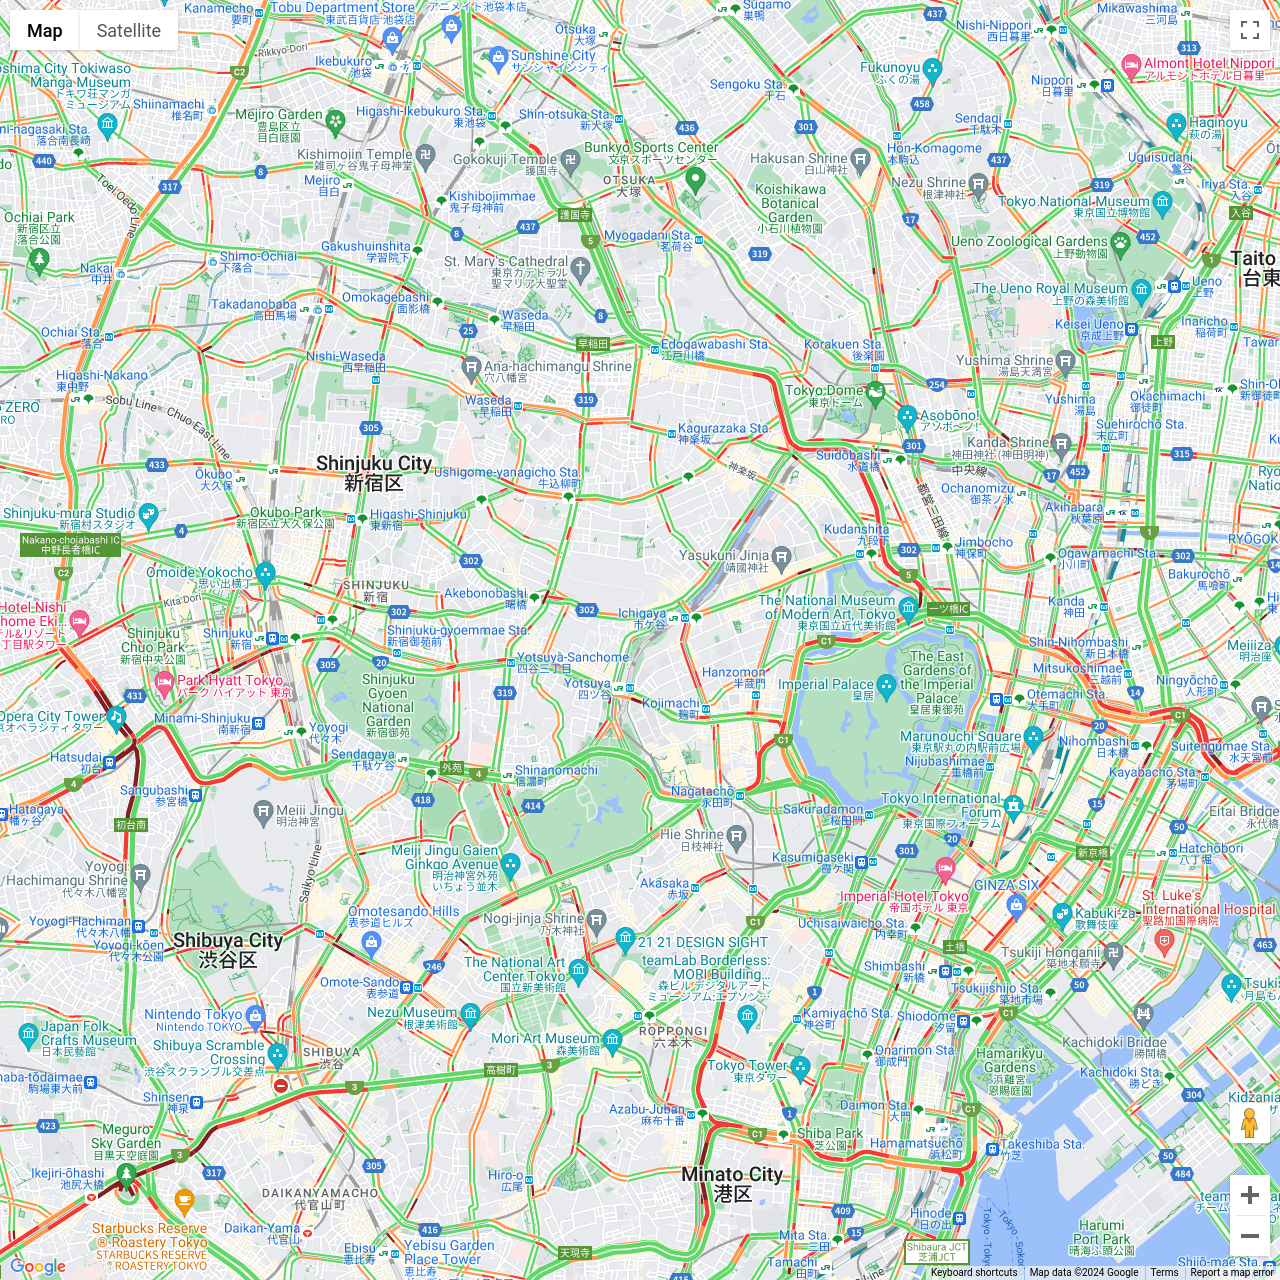 Tokyo Traffic Congestion